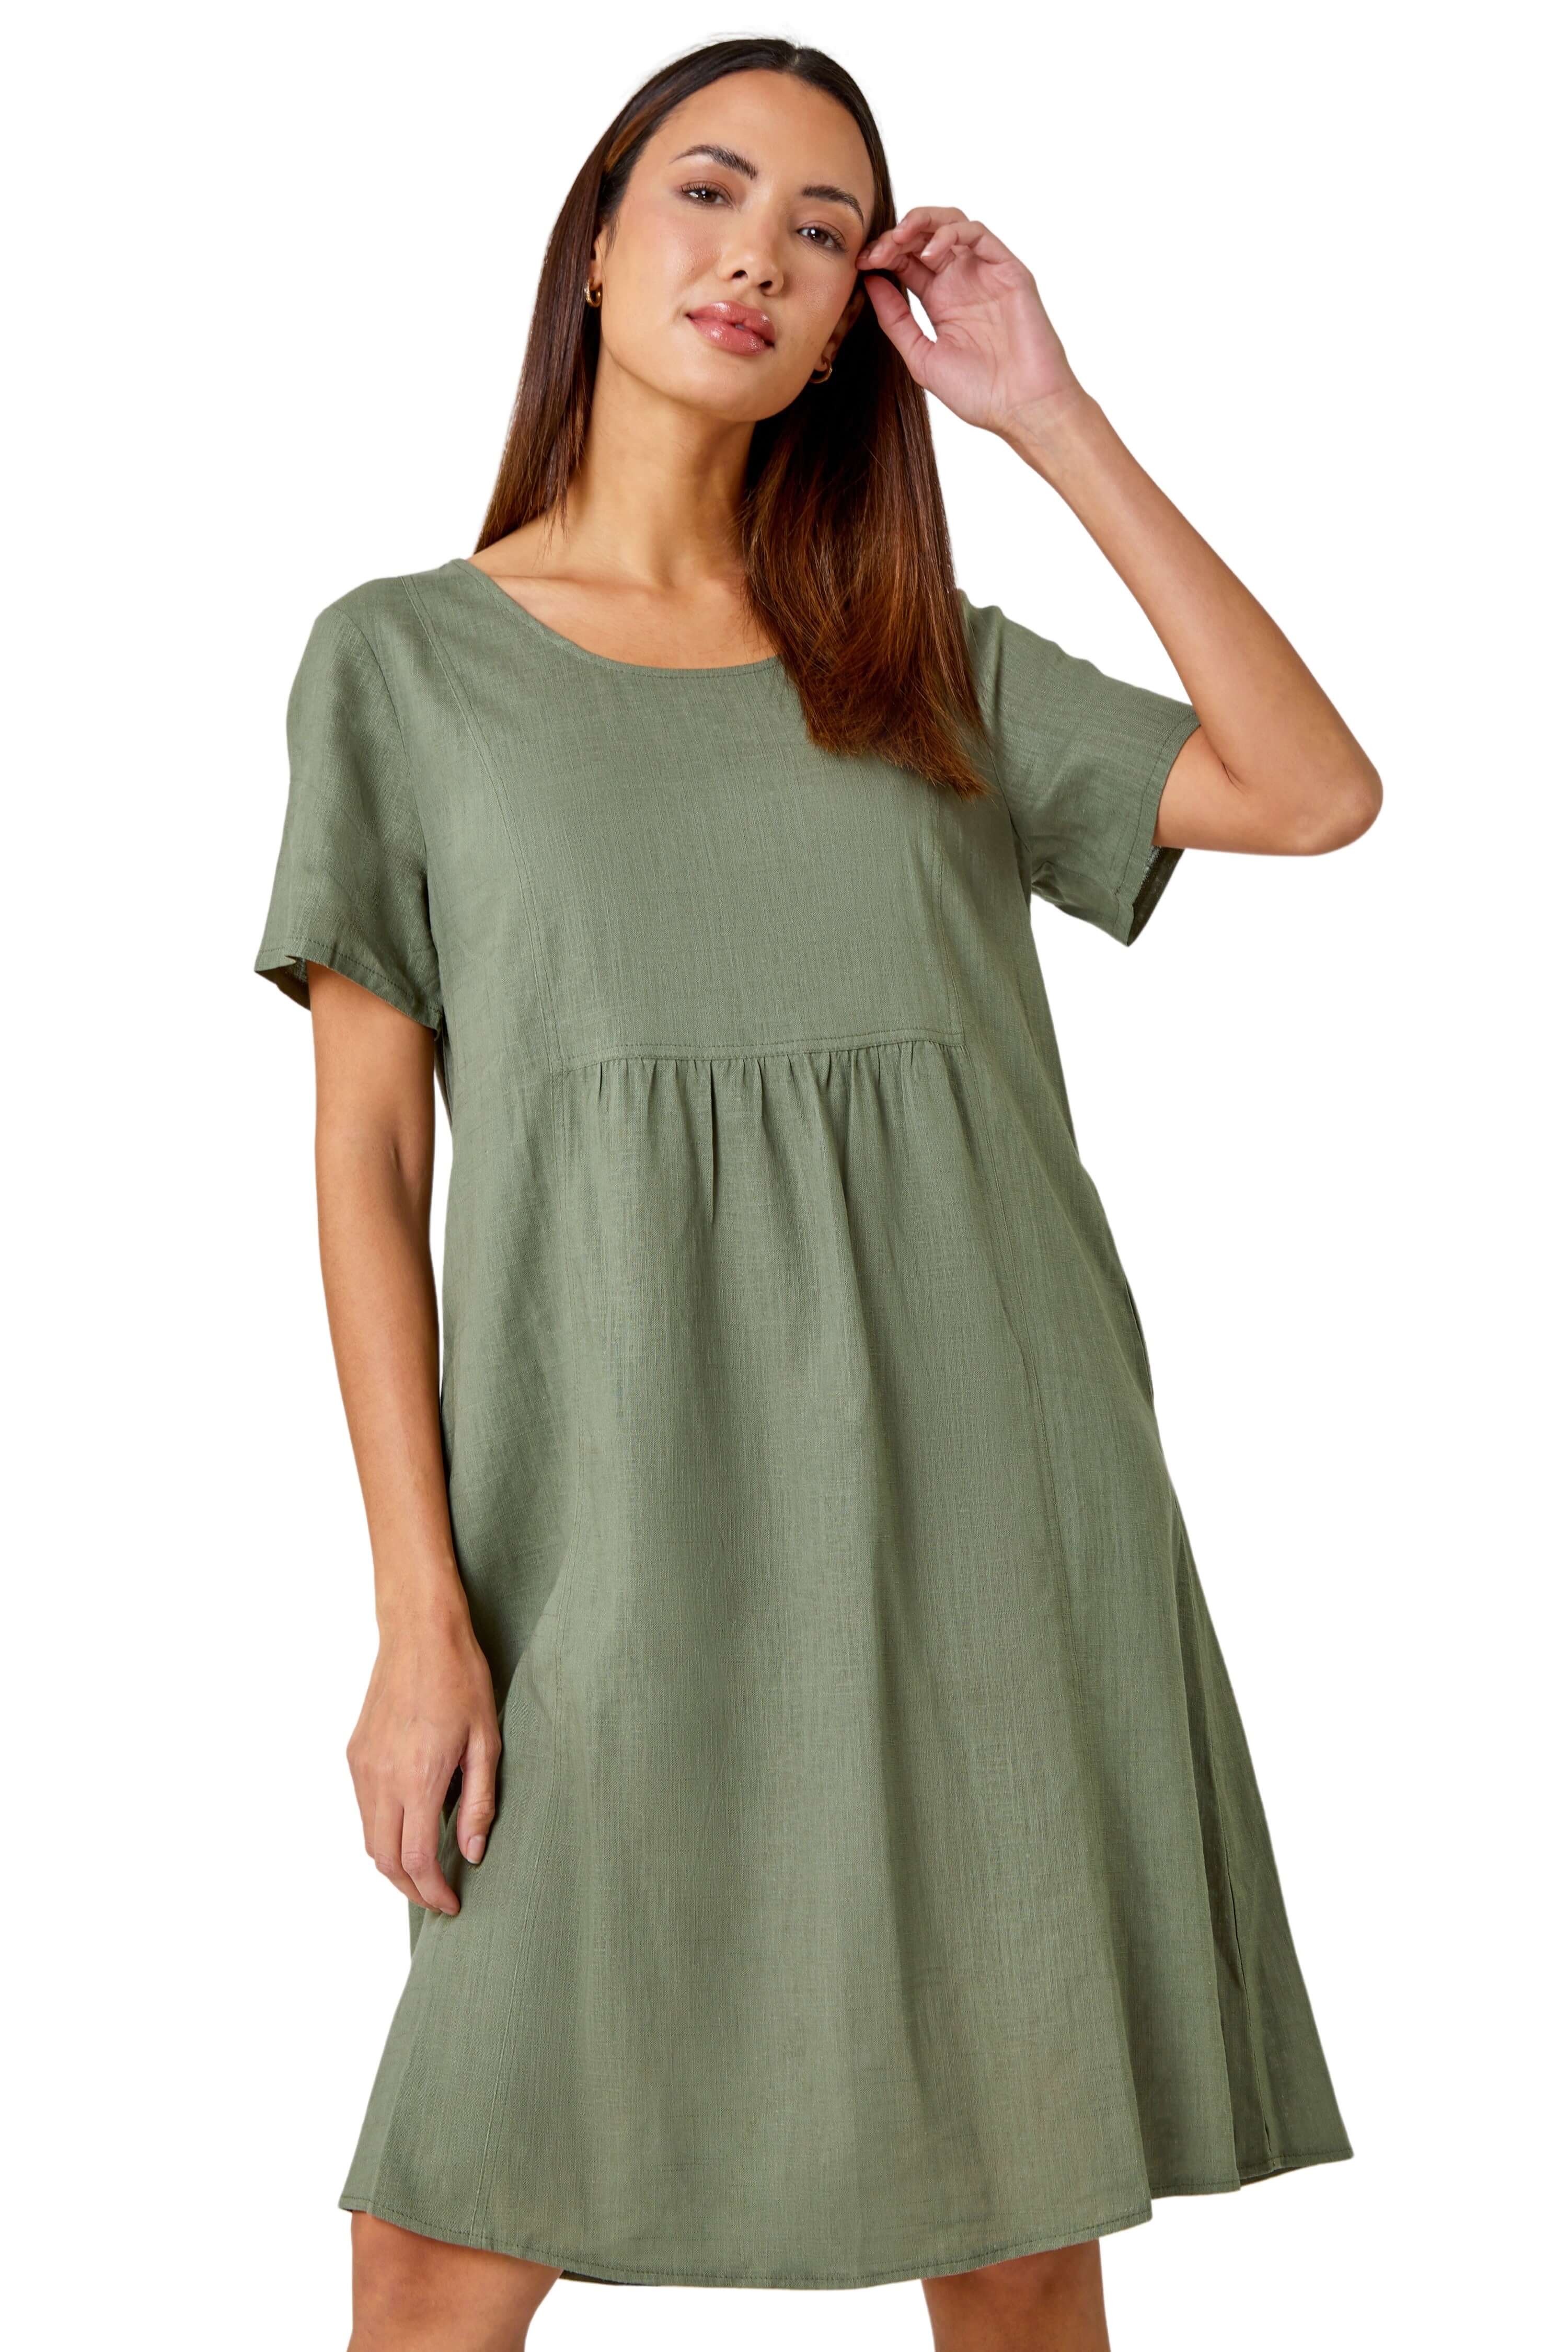 KHAKI Relaxed Cotton Blend Pocket Dress, Image 6 of 6